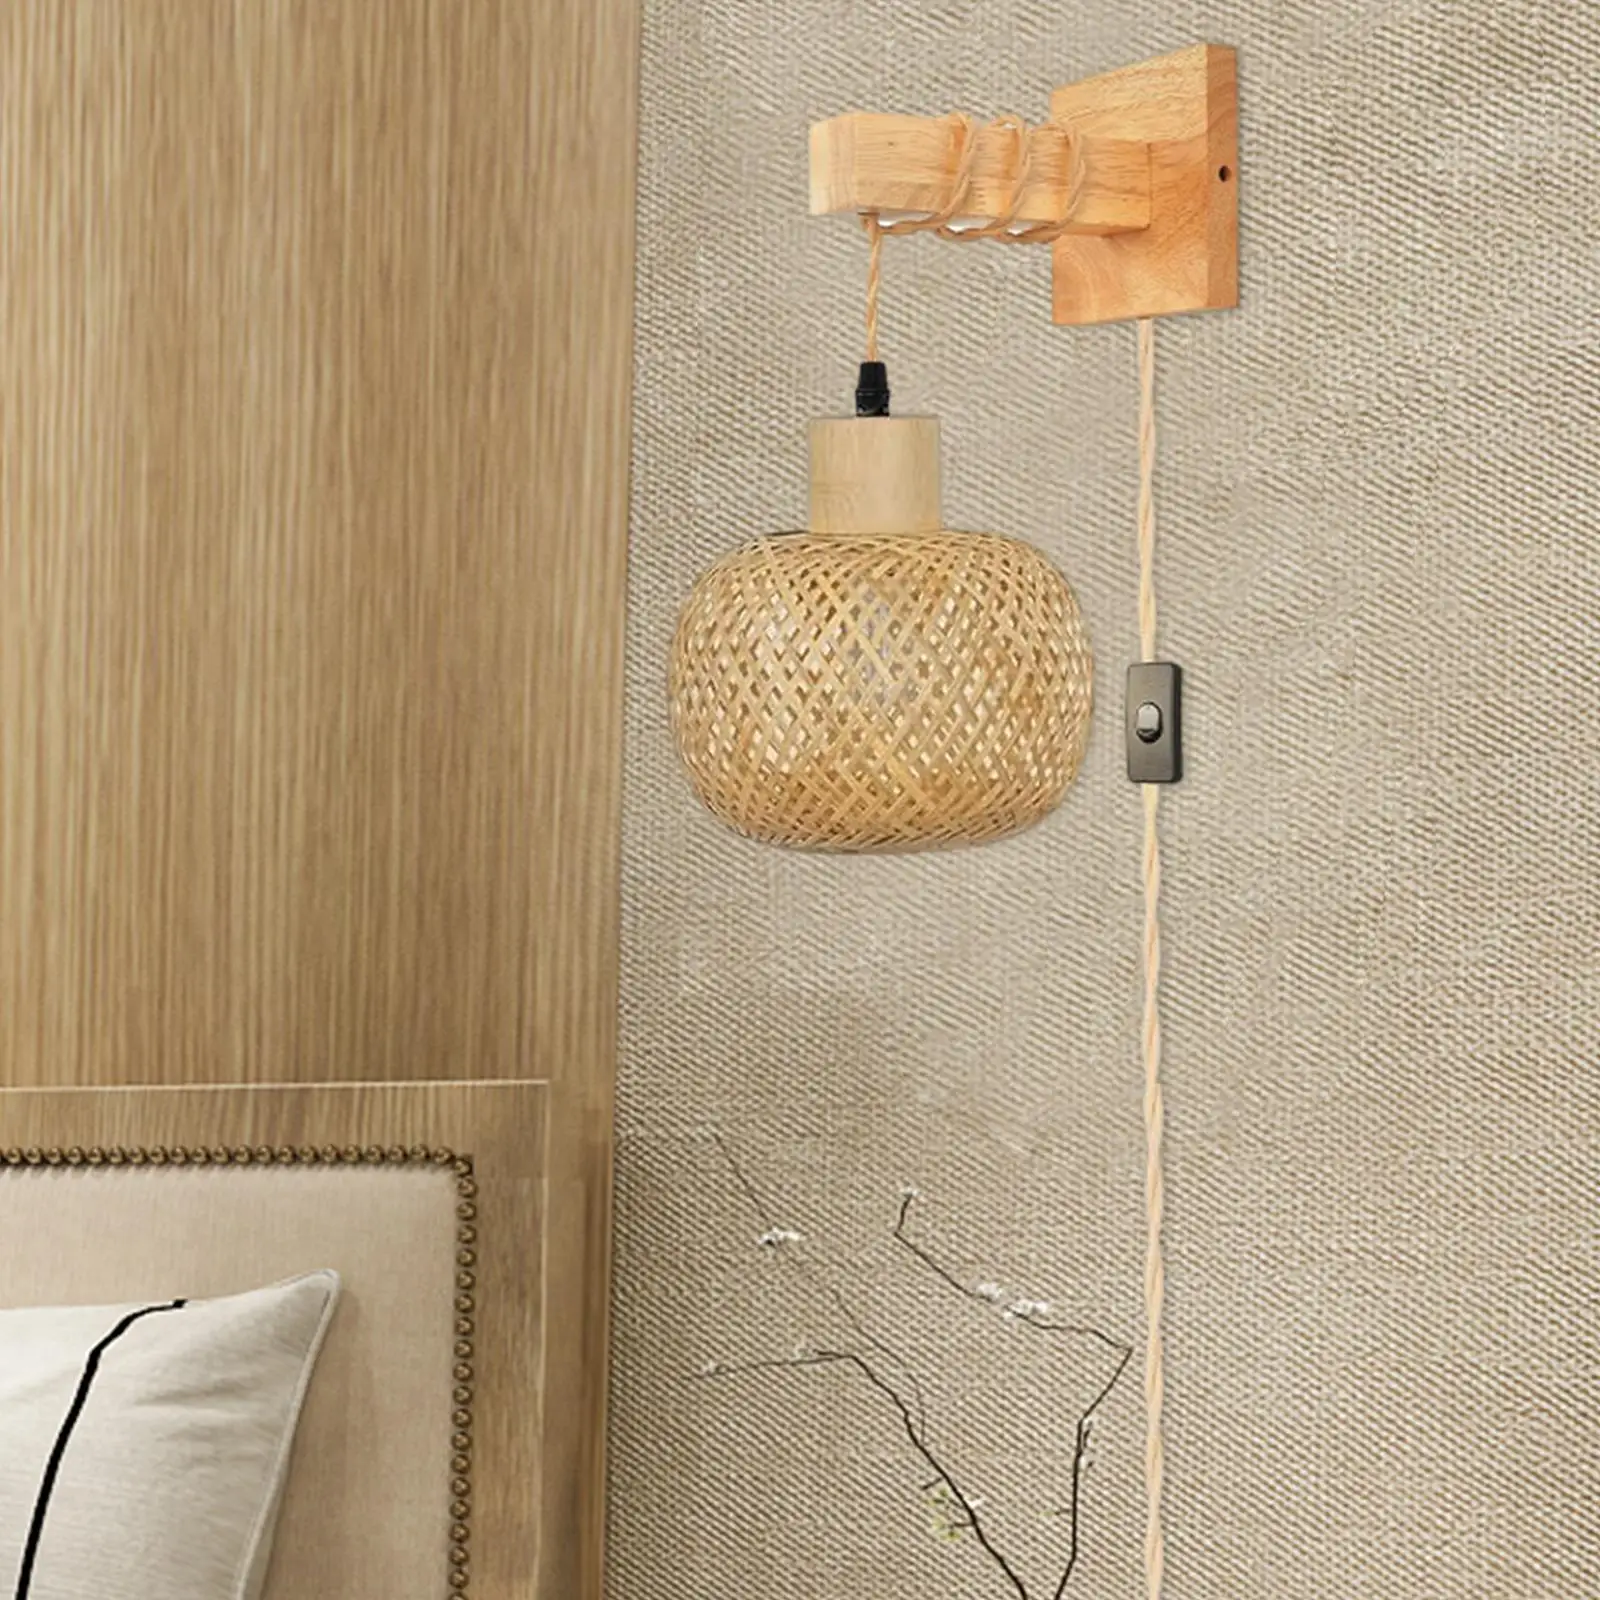 Wall Sconce Boho Decor Decorative Hand Woven E26 Base Plug in Pendant Light for Living Room Bathroom Farmhouse Home Bedroom